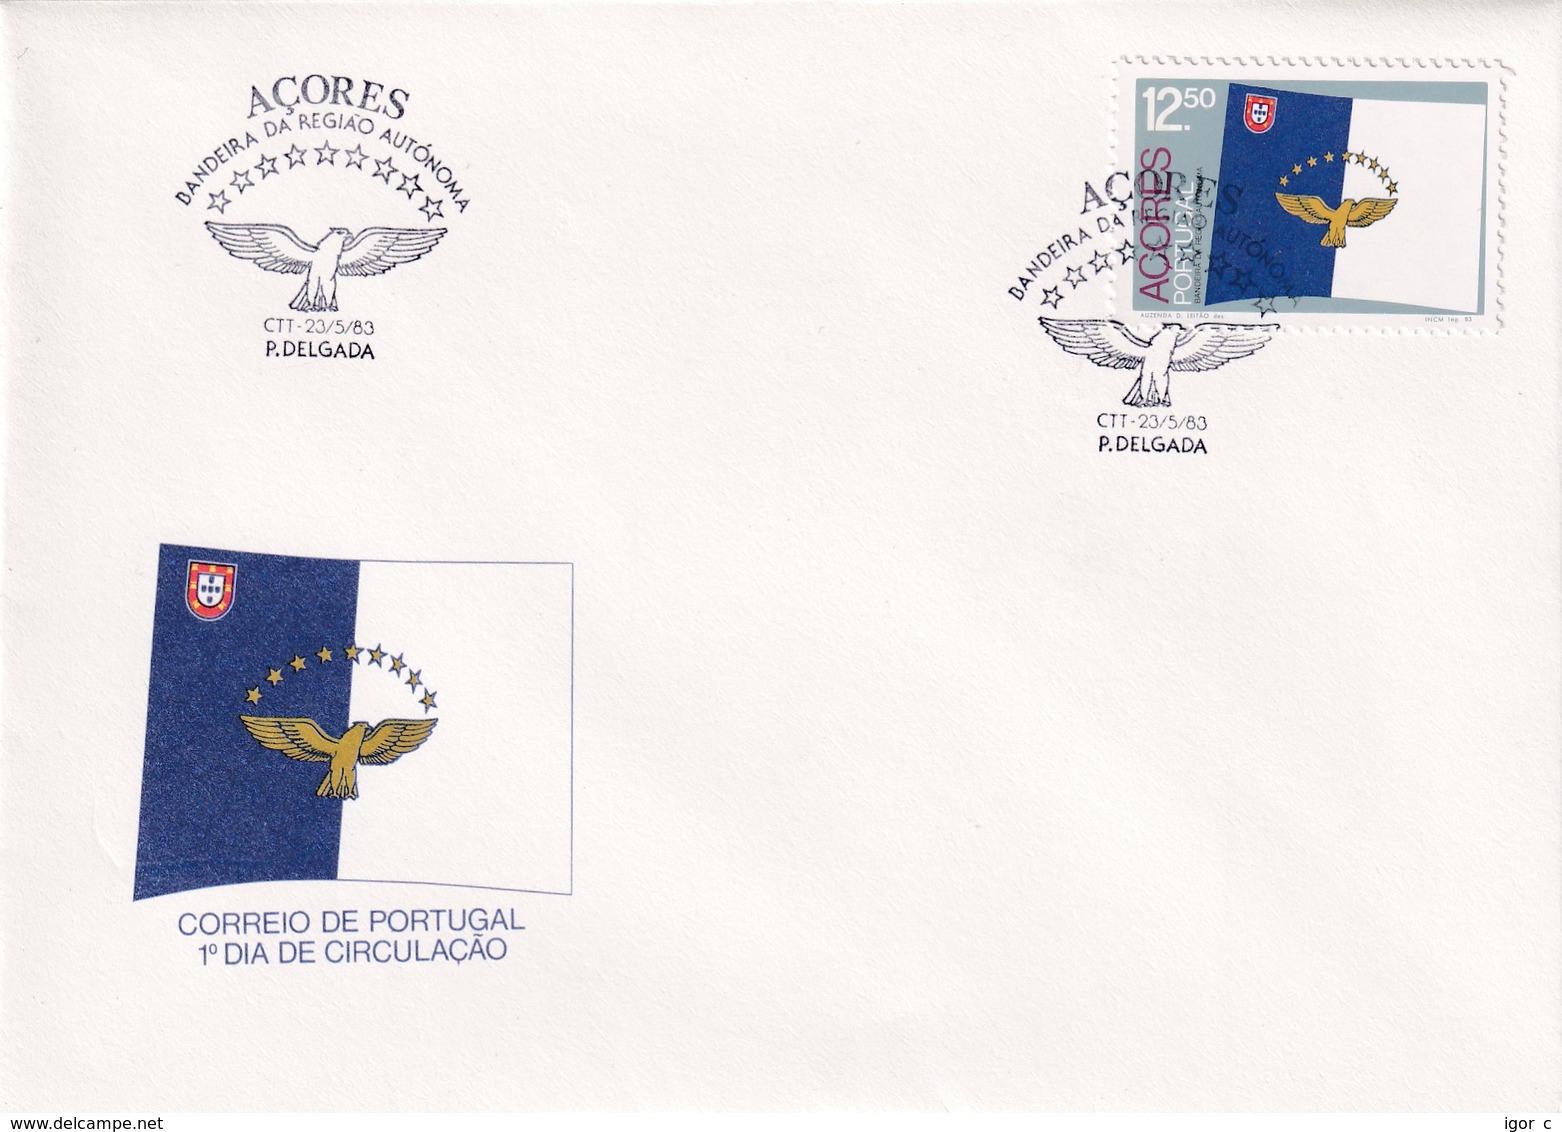 Portugal Azores FDC 1983 Cover: Flags; Flag Of Azores; Fauna Hawk Aquilla; Goshawk (Accipiter Gentilis) - Portuguese Africa